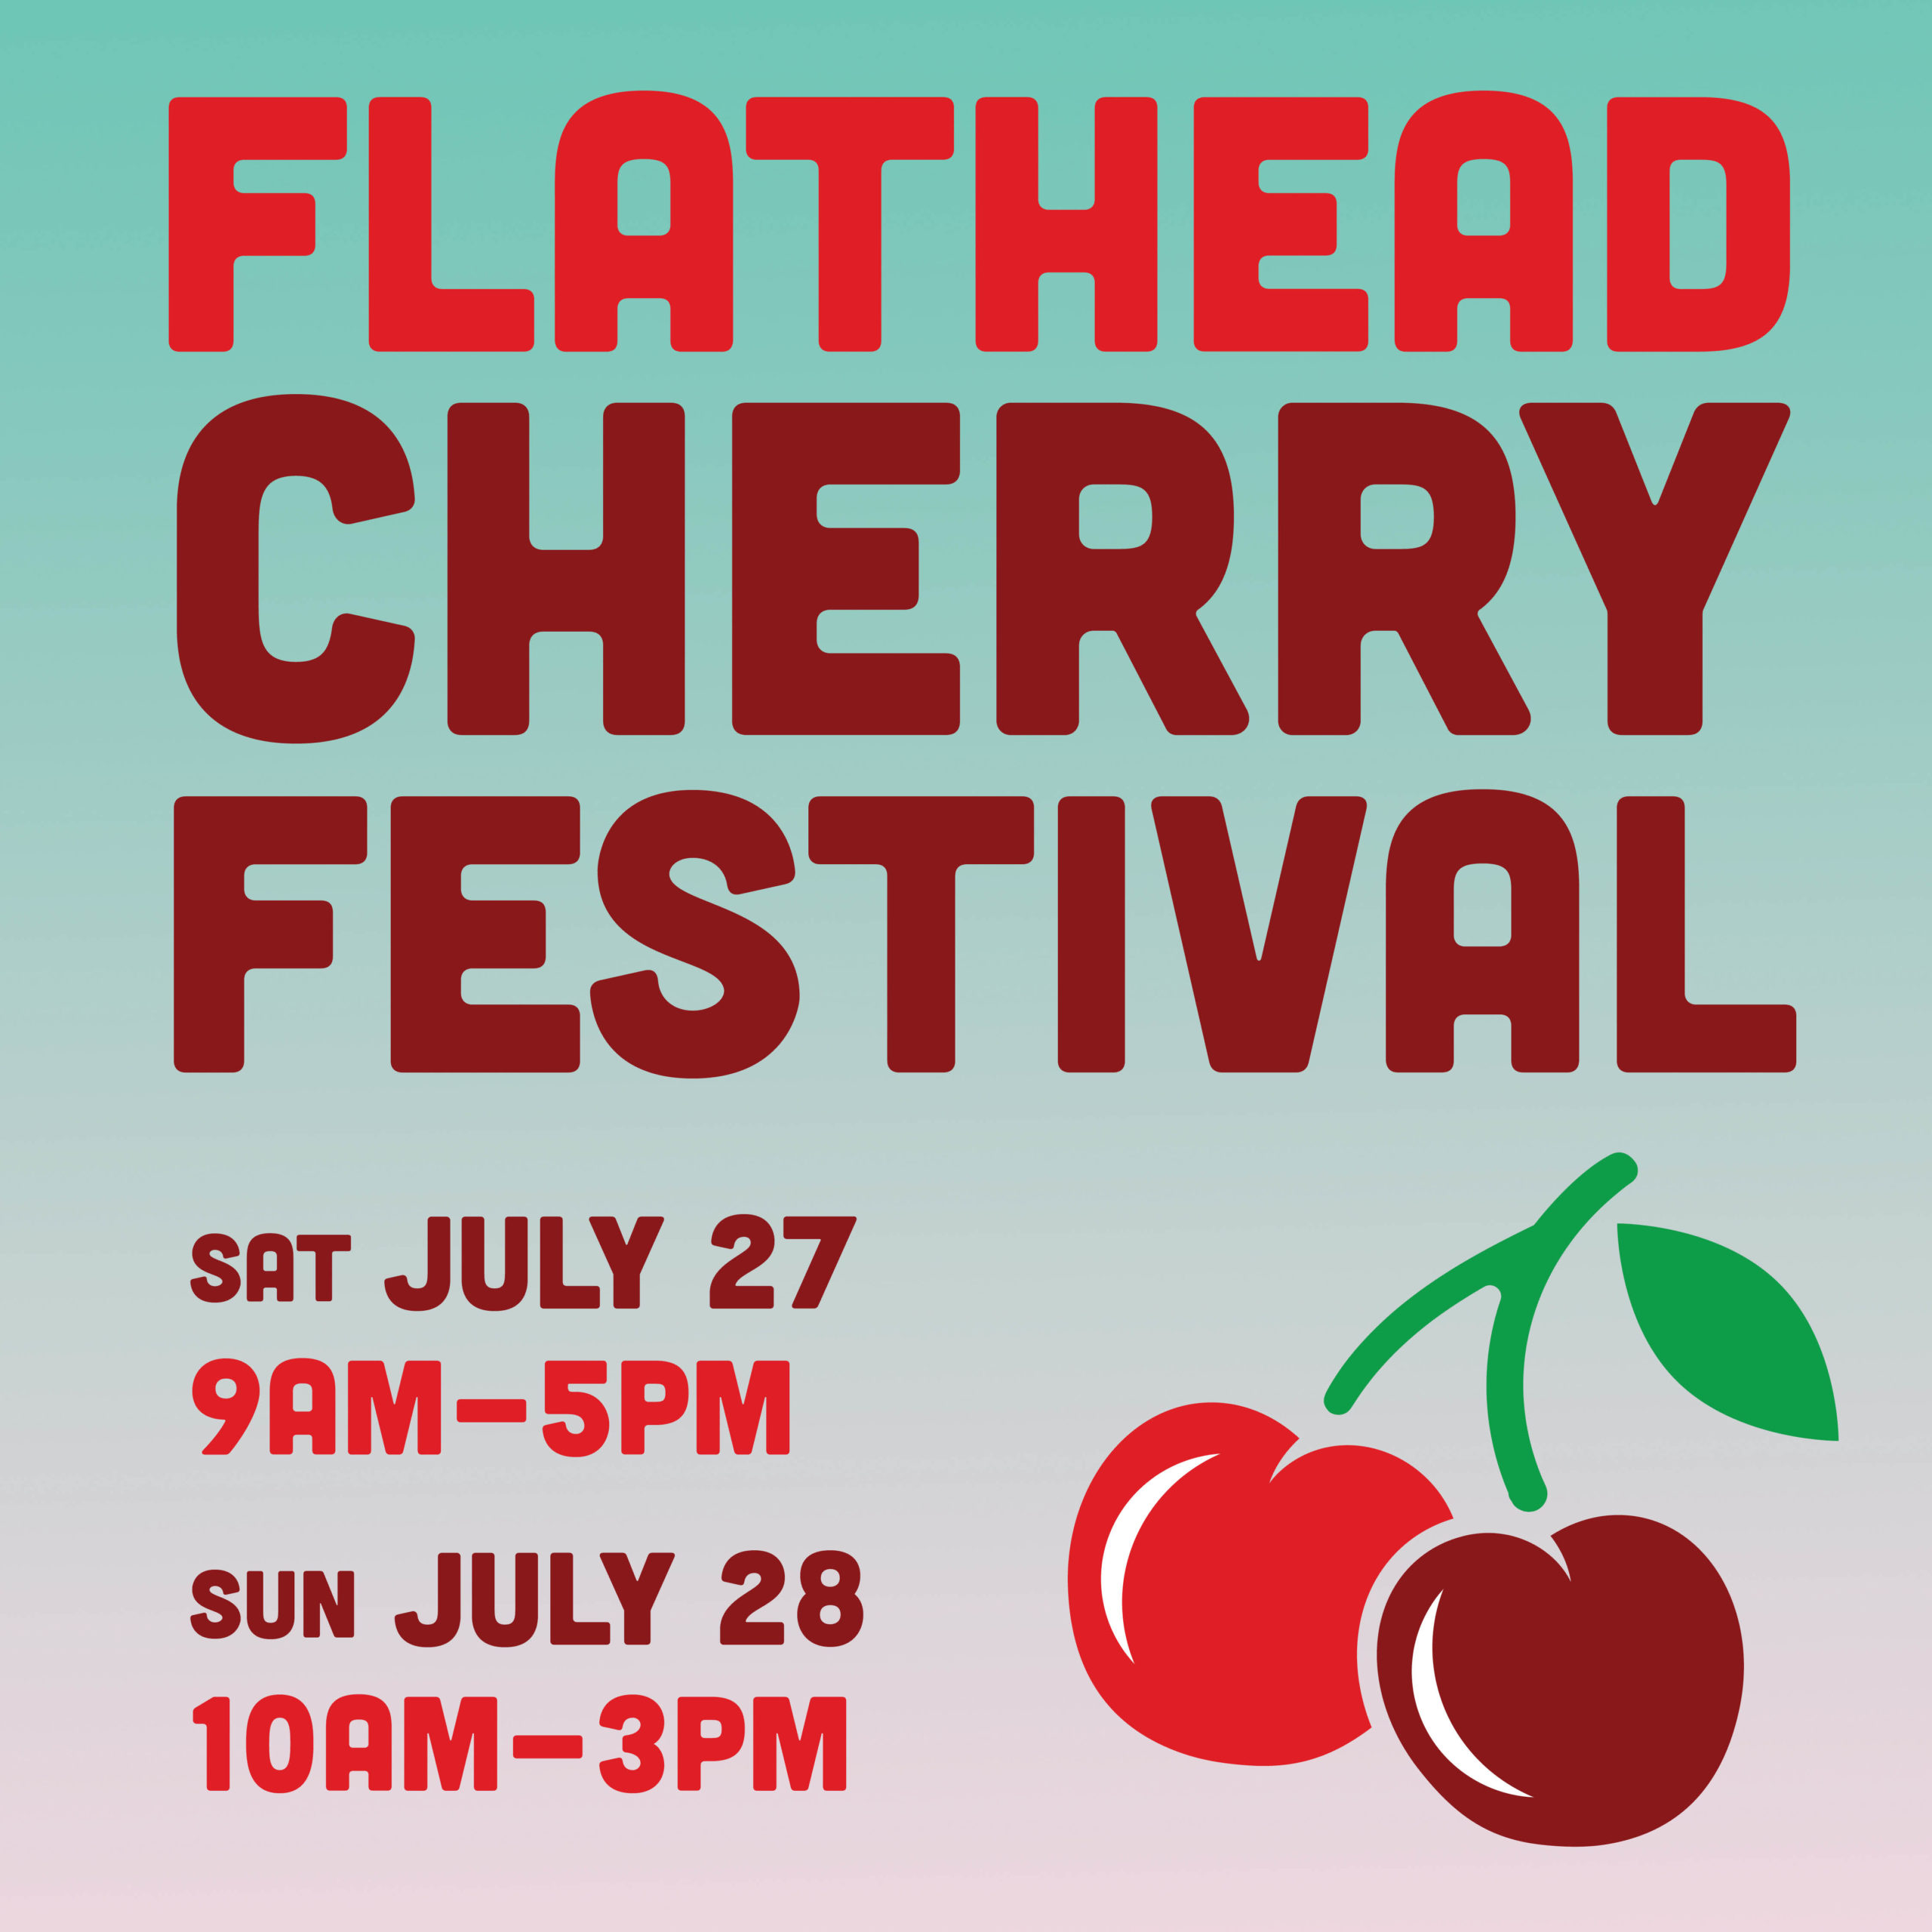 Flathead Cherry Festival Polson Chamber of Commerce